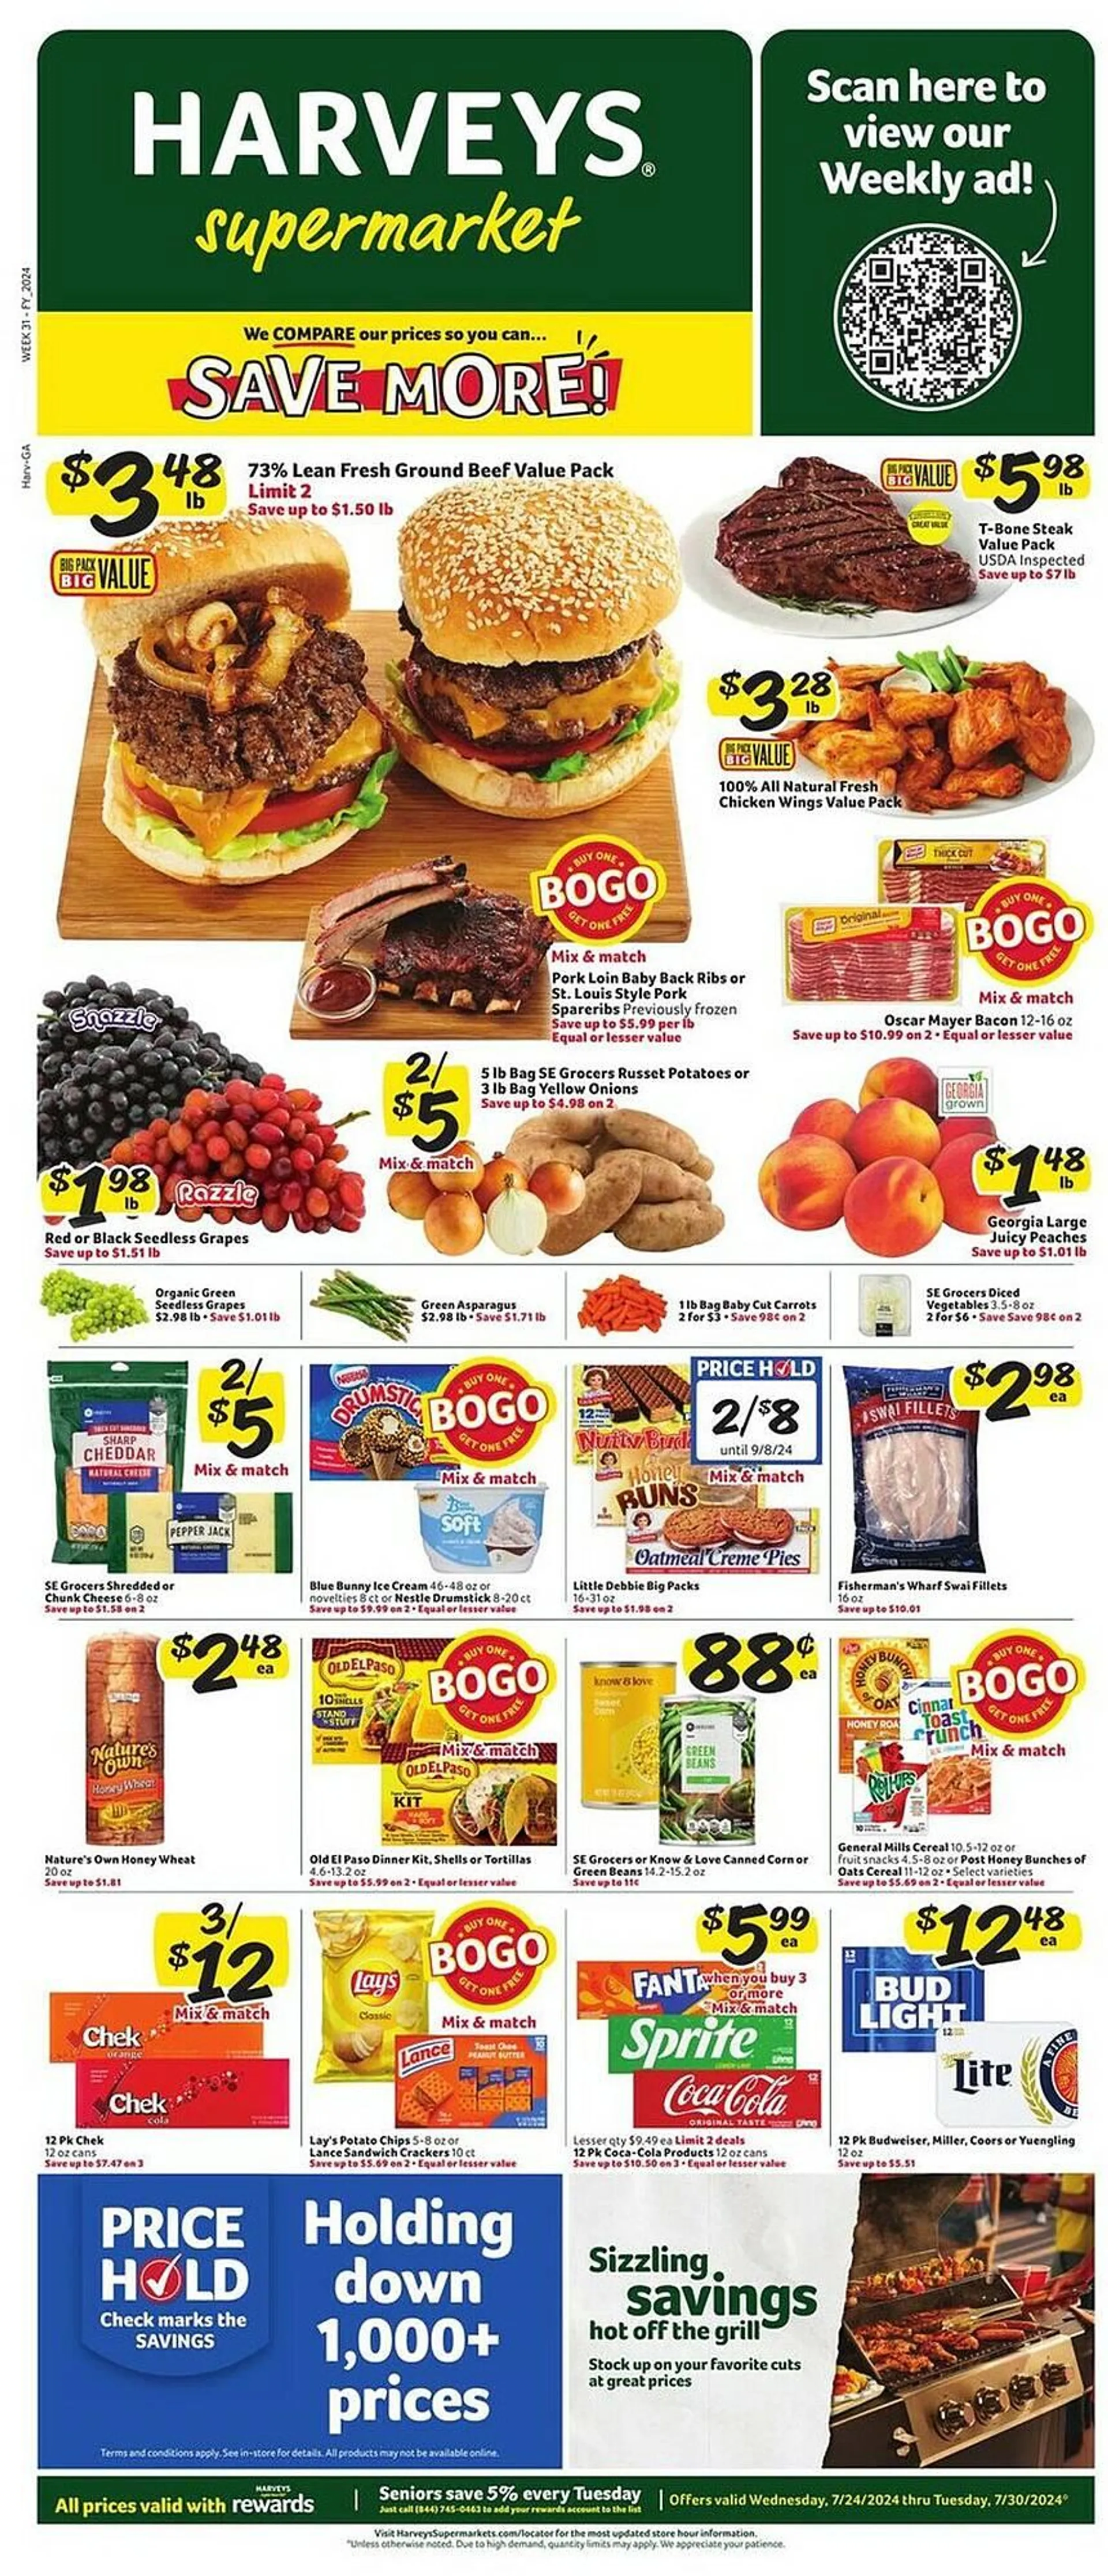 Harveys Supermarkets Weekly Ad - 1